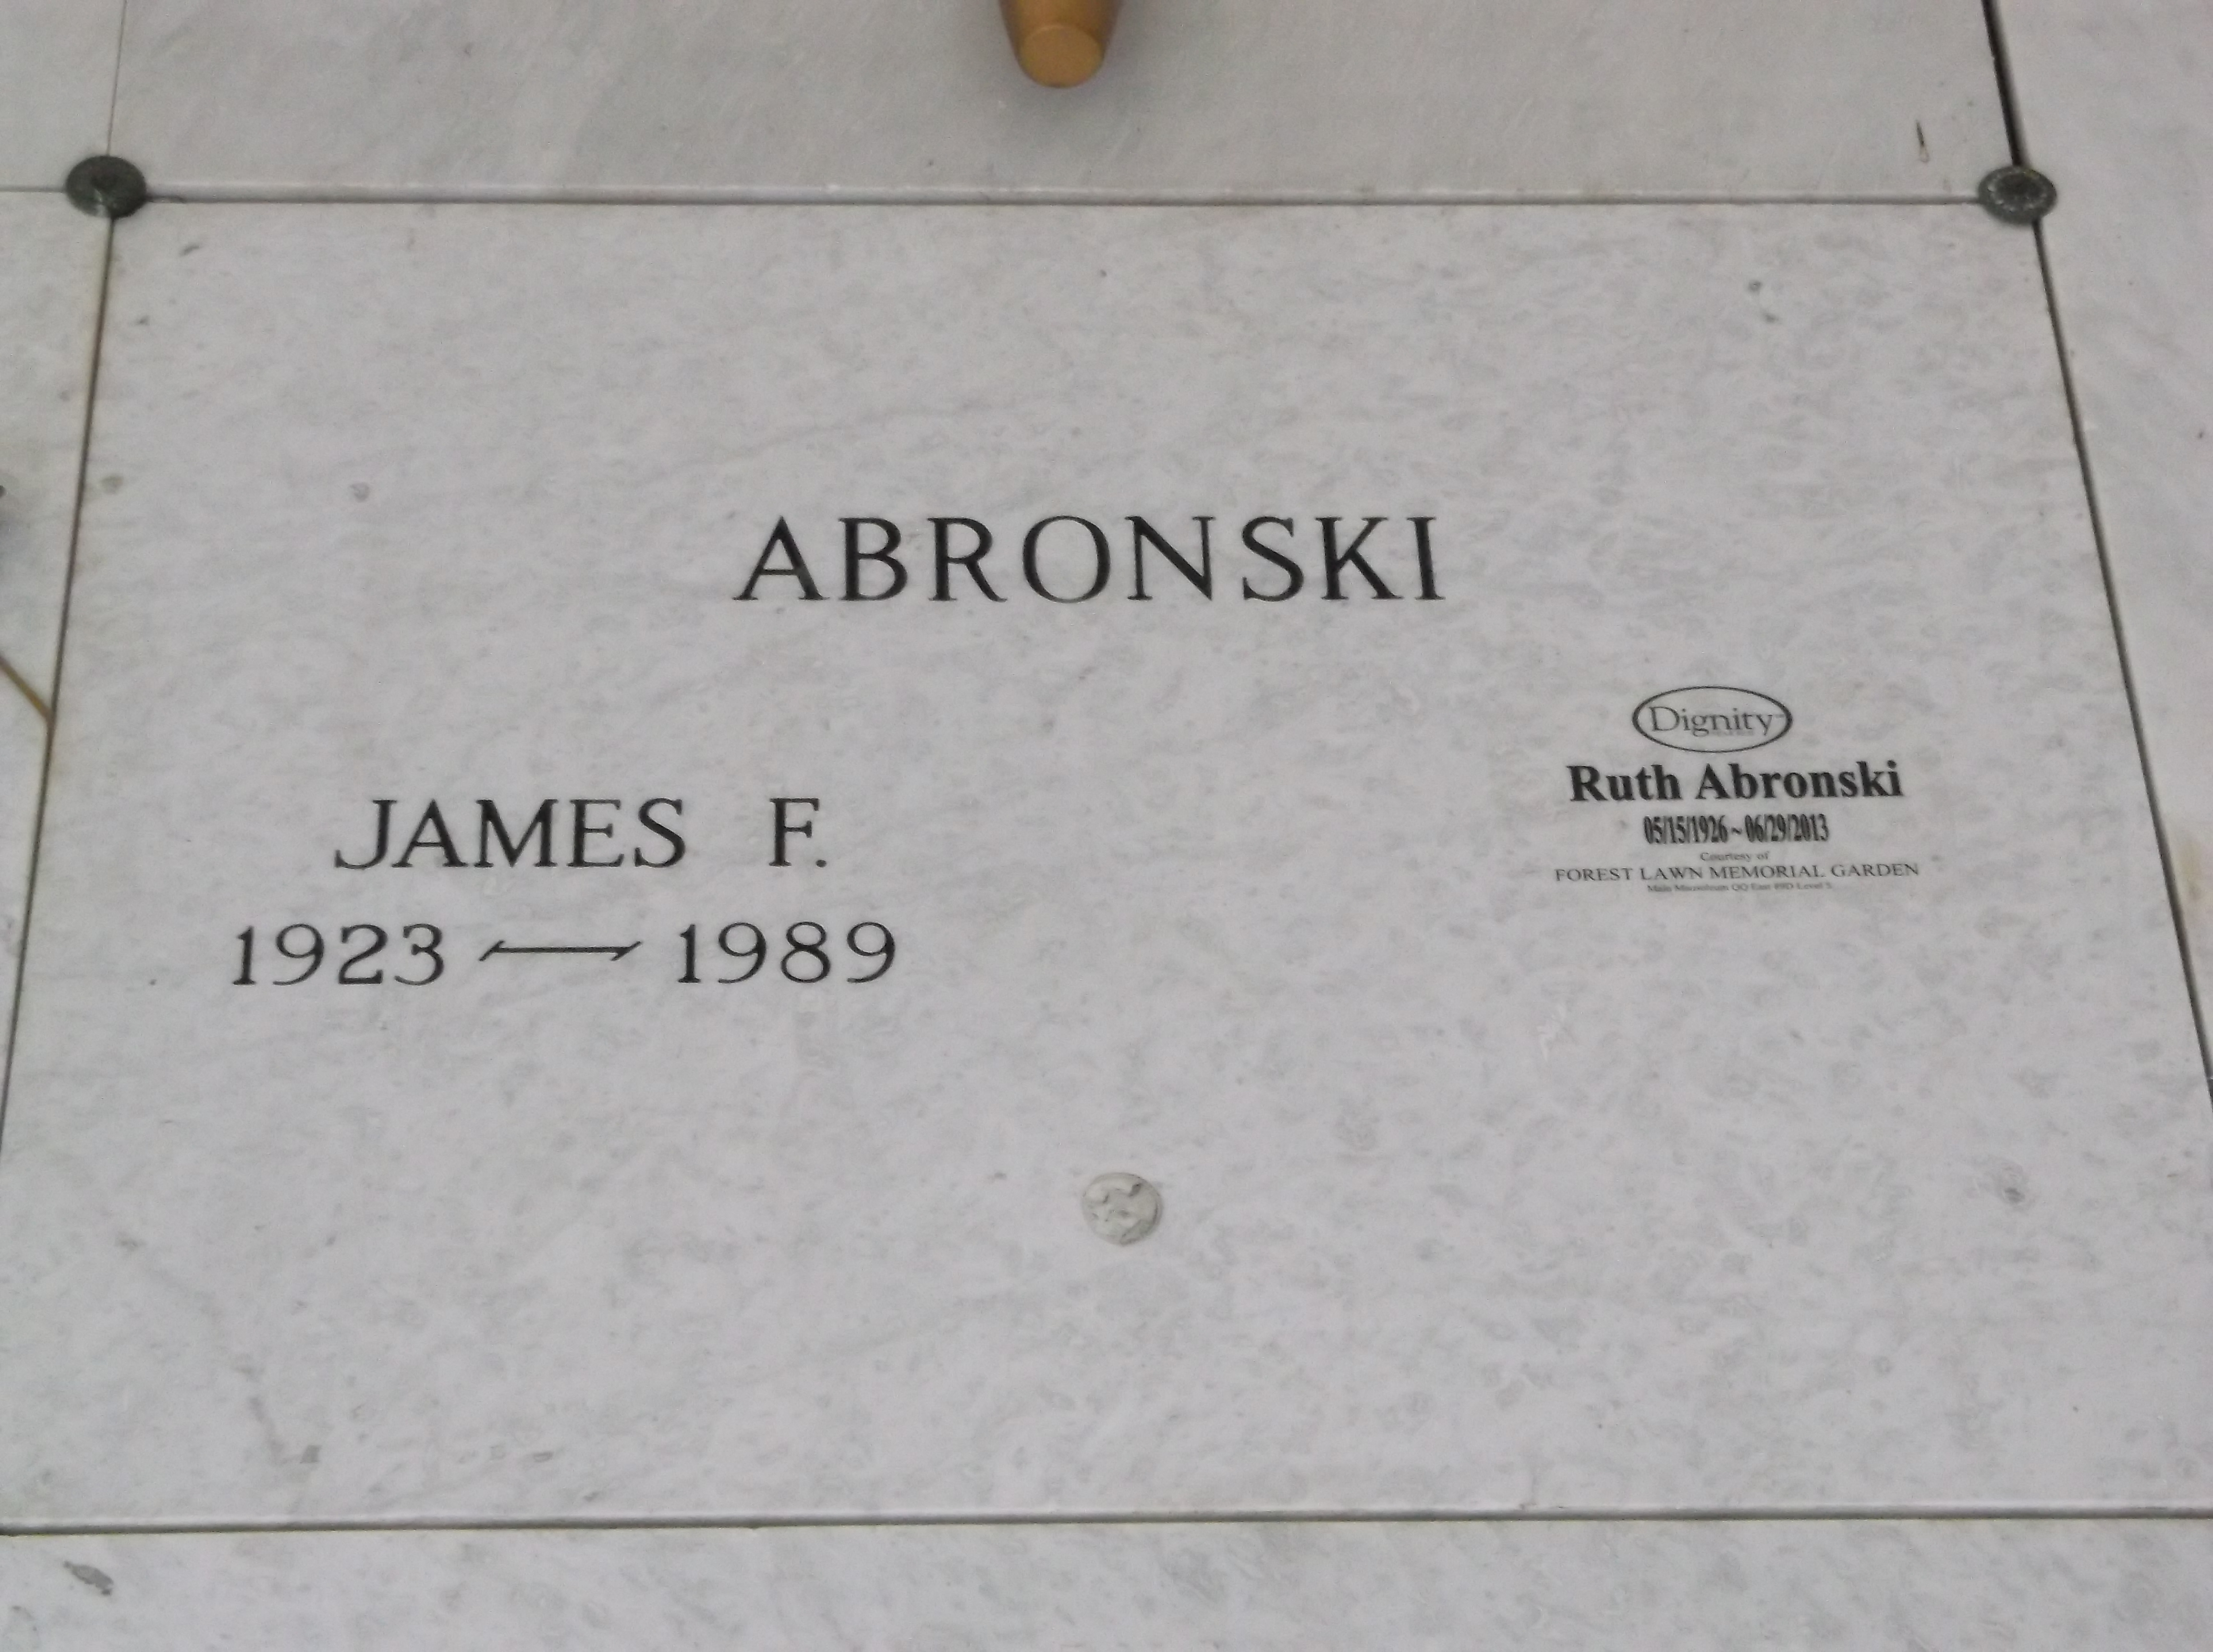 James F Abronski